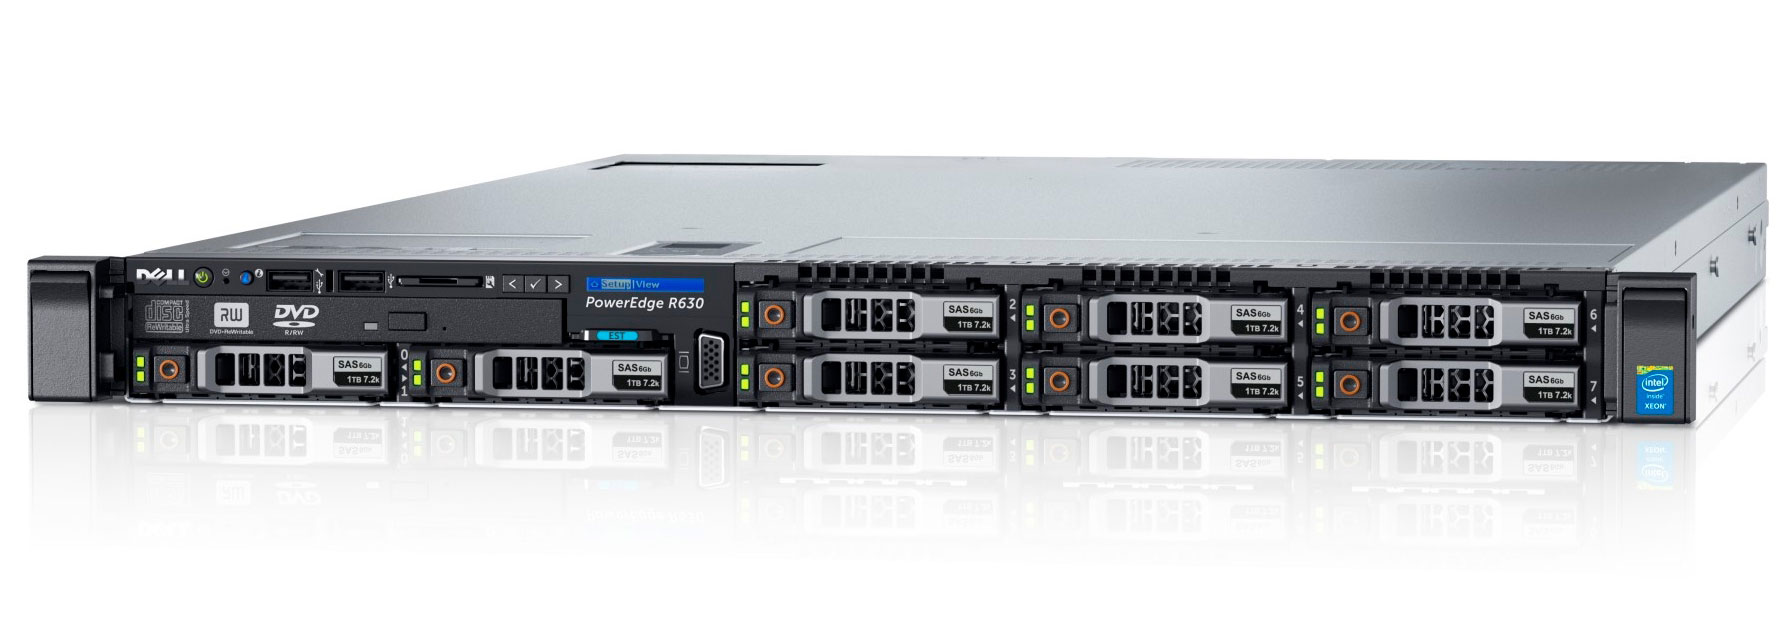 Подробное фото Сервер DELL PowerEdge R630 2x Xeon E5-2696v4 256Gb 2133P DDR4 8x noHDD 2.5" SAS RAID Perc H730, 1024Mb, DVD, 2*PSU